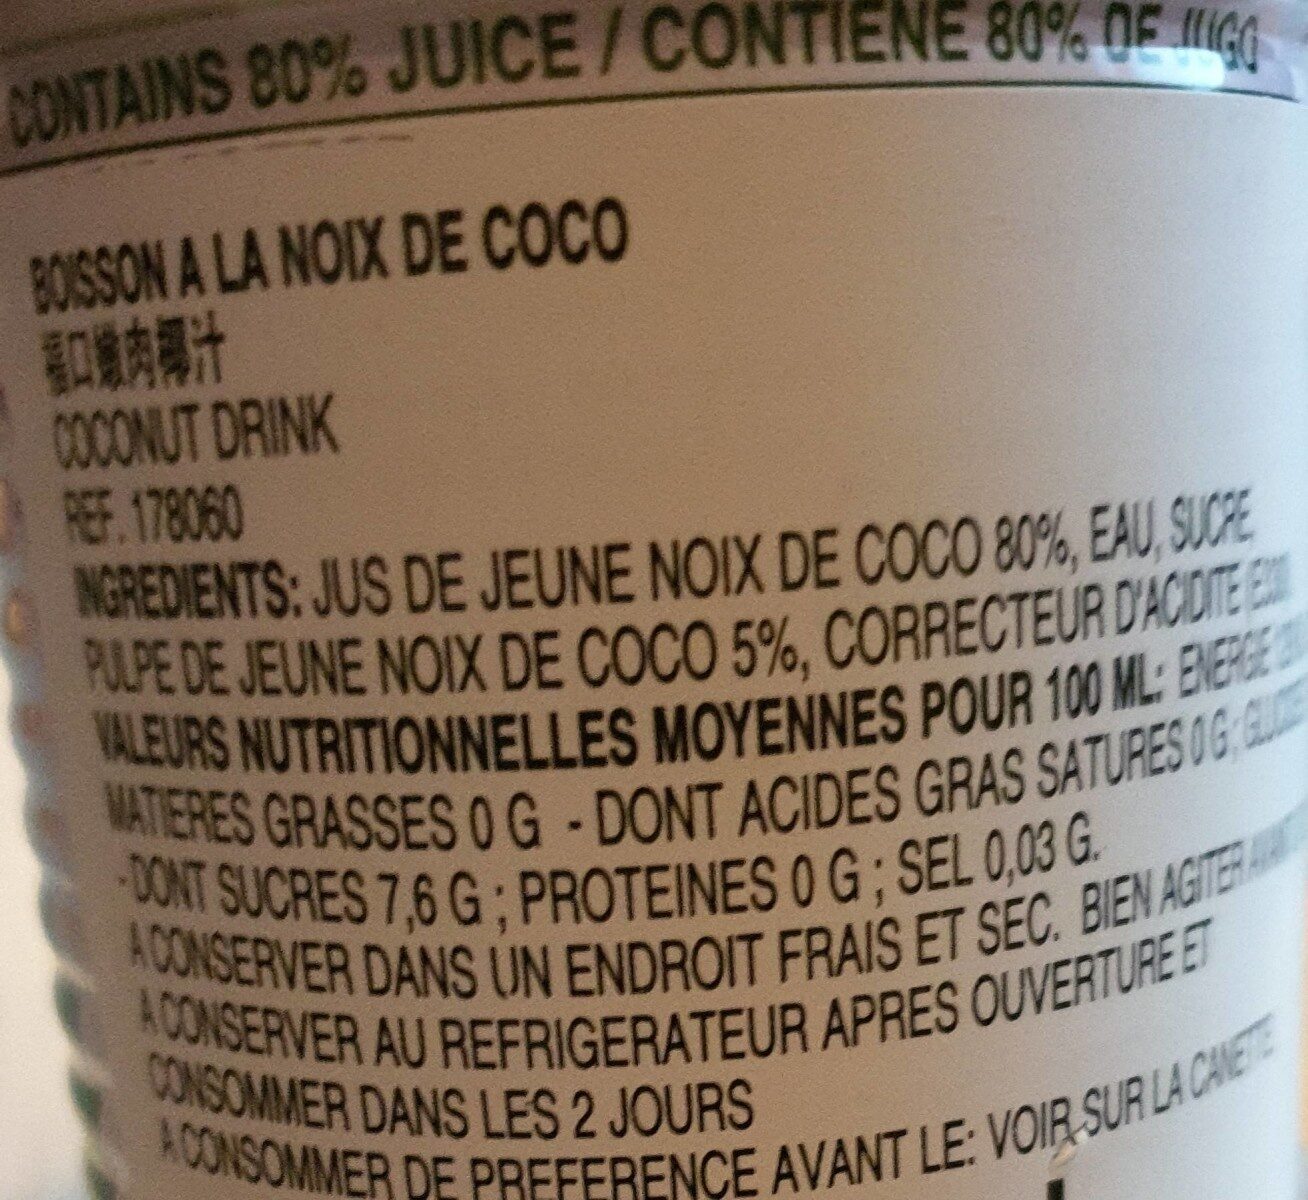 Coconut juice - Nutrition facts